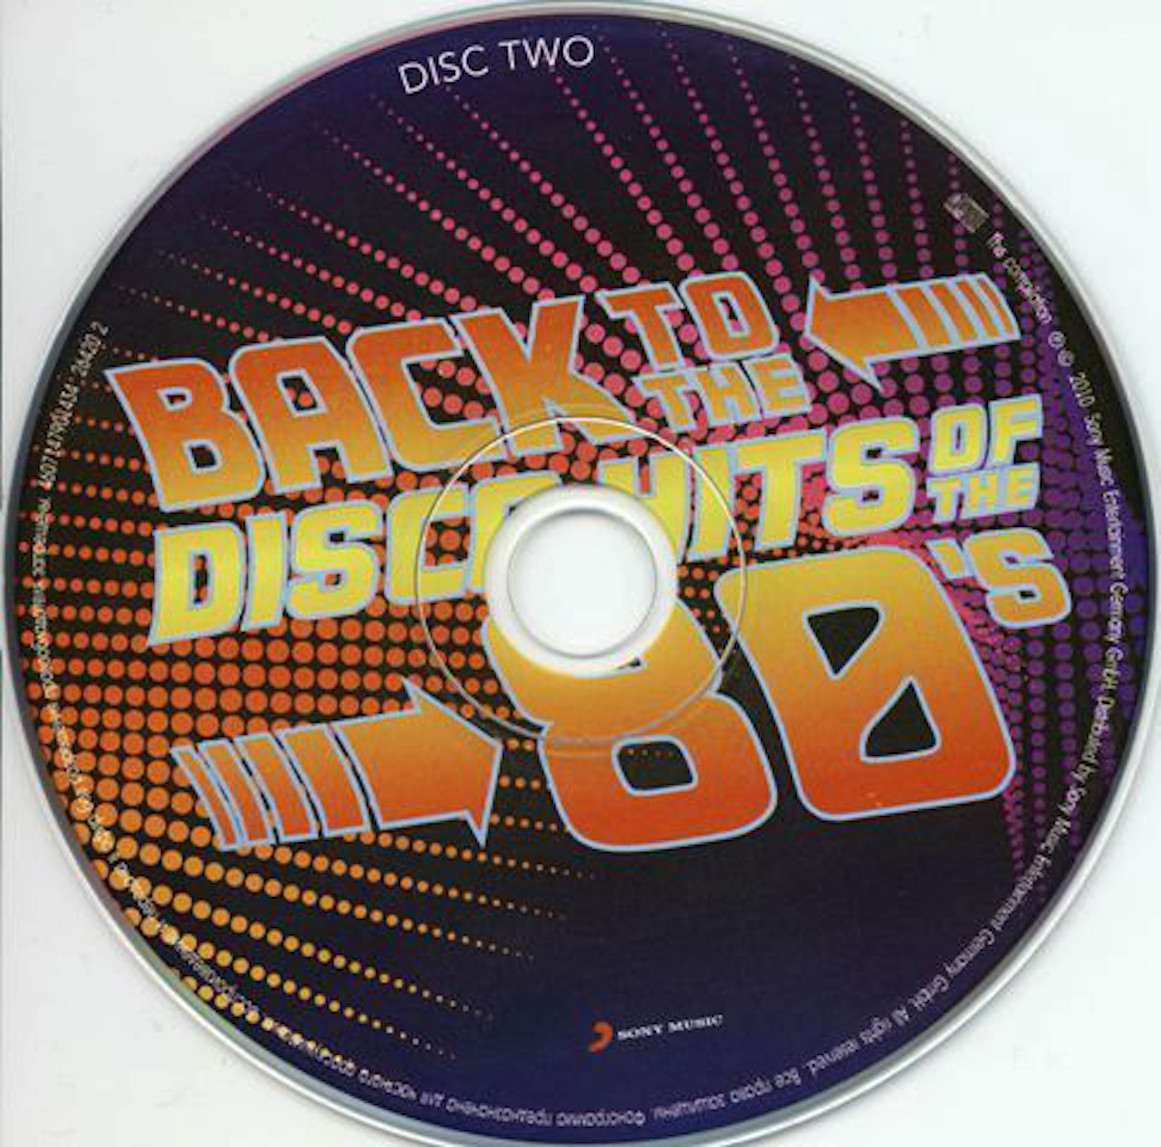 Диско 80 х золотые хиты. Диск Crazy Disco 80s. 80s Hits. Диски 80-90. Back to the Disco Hits of the 80's.